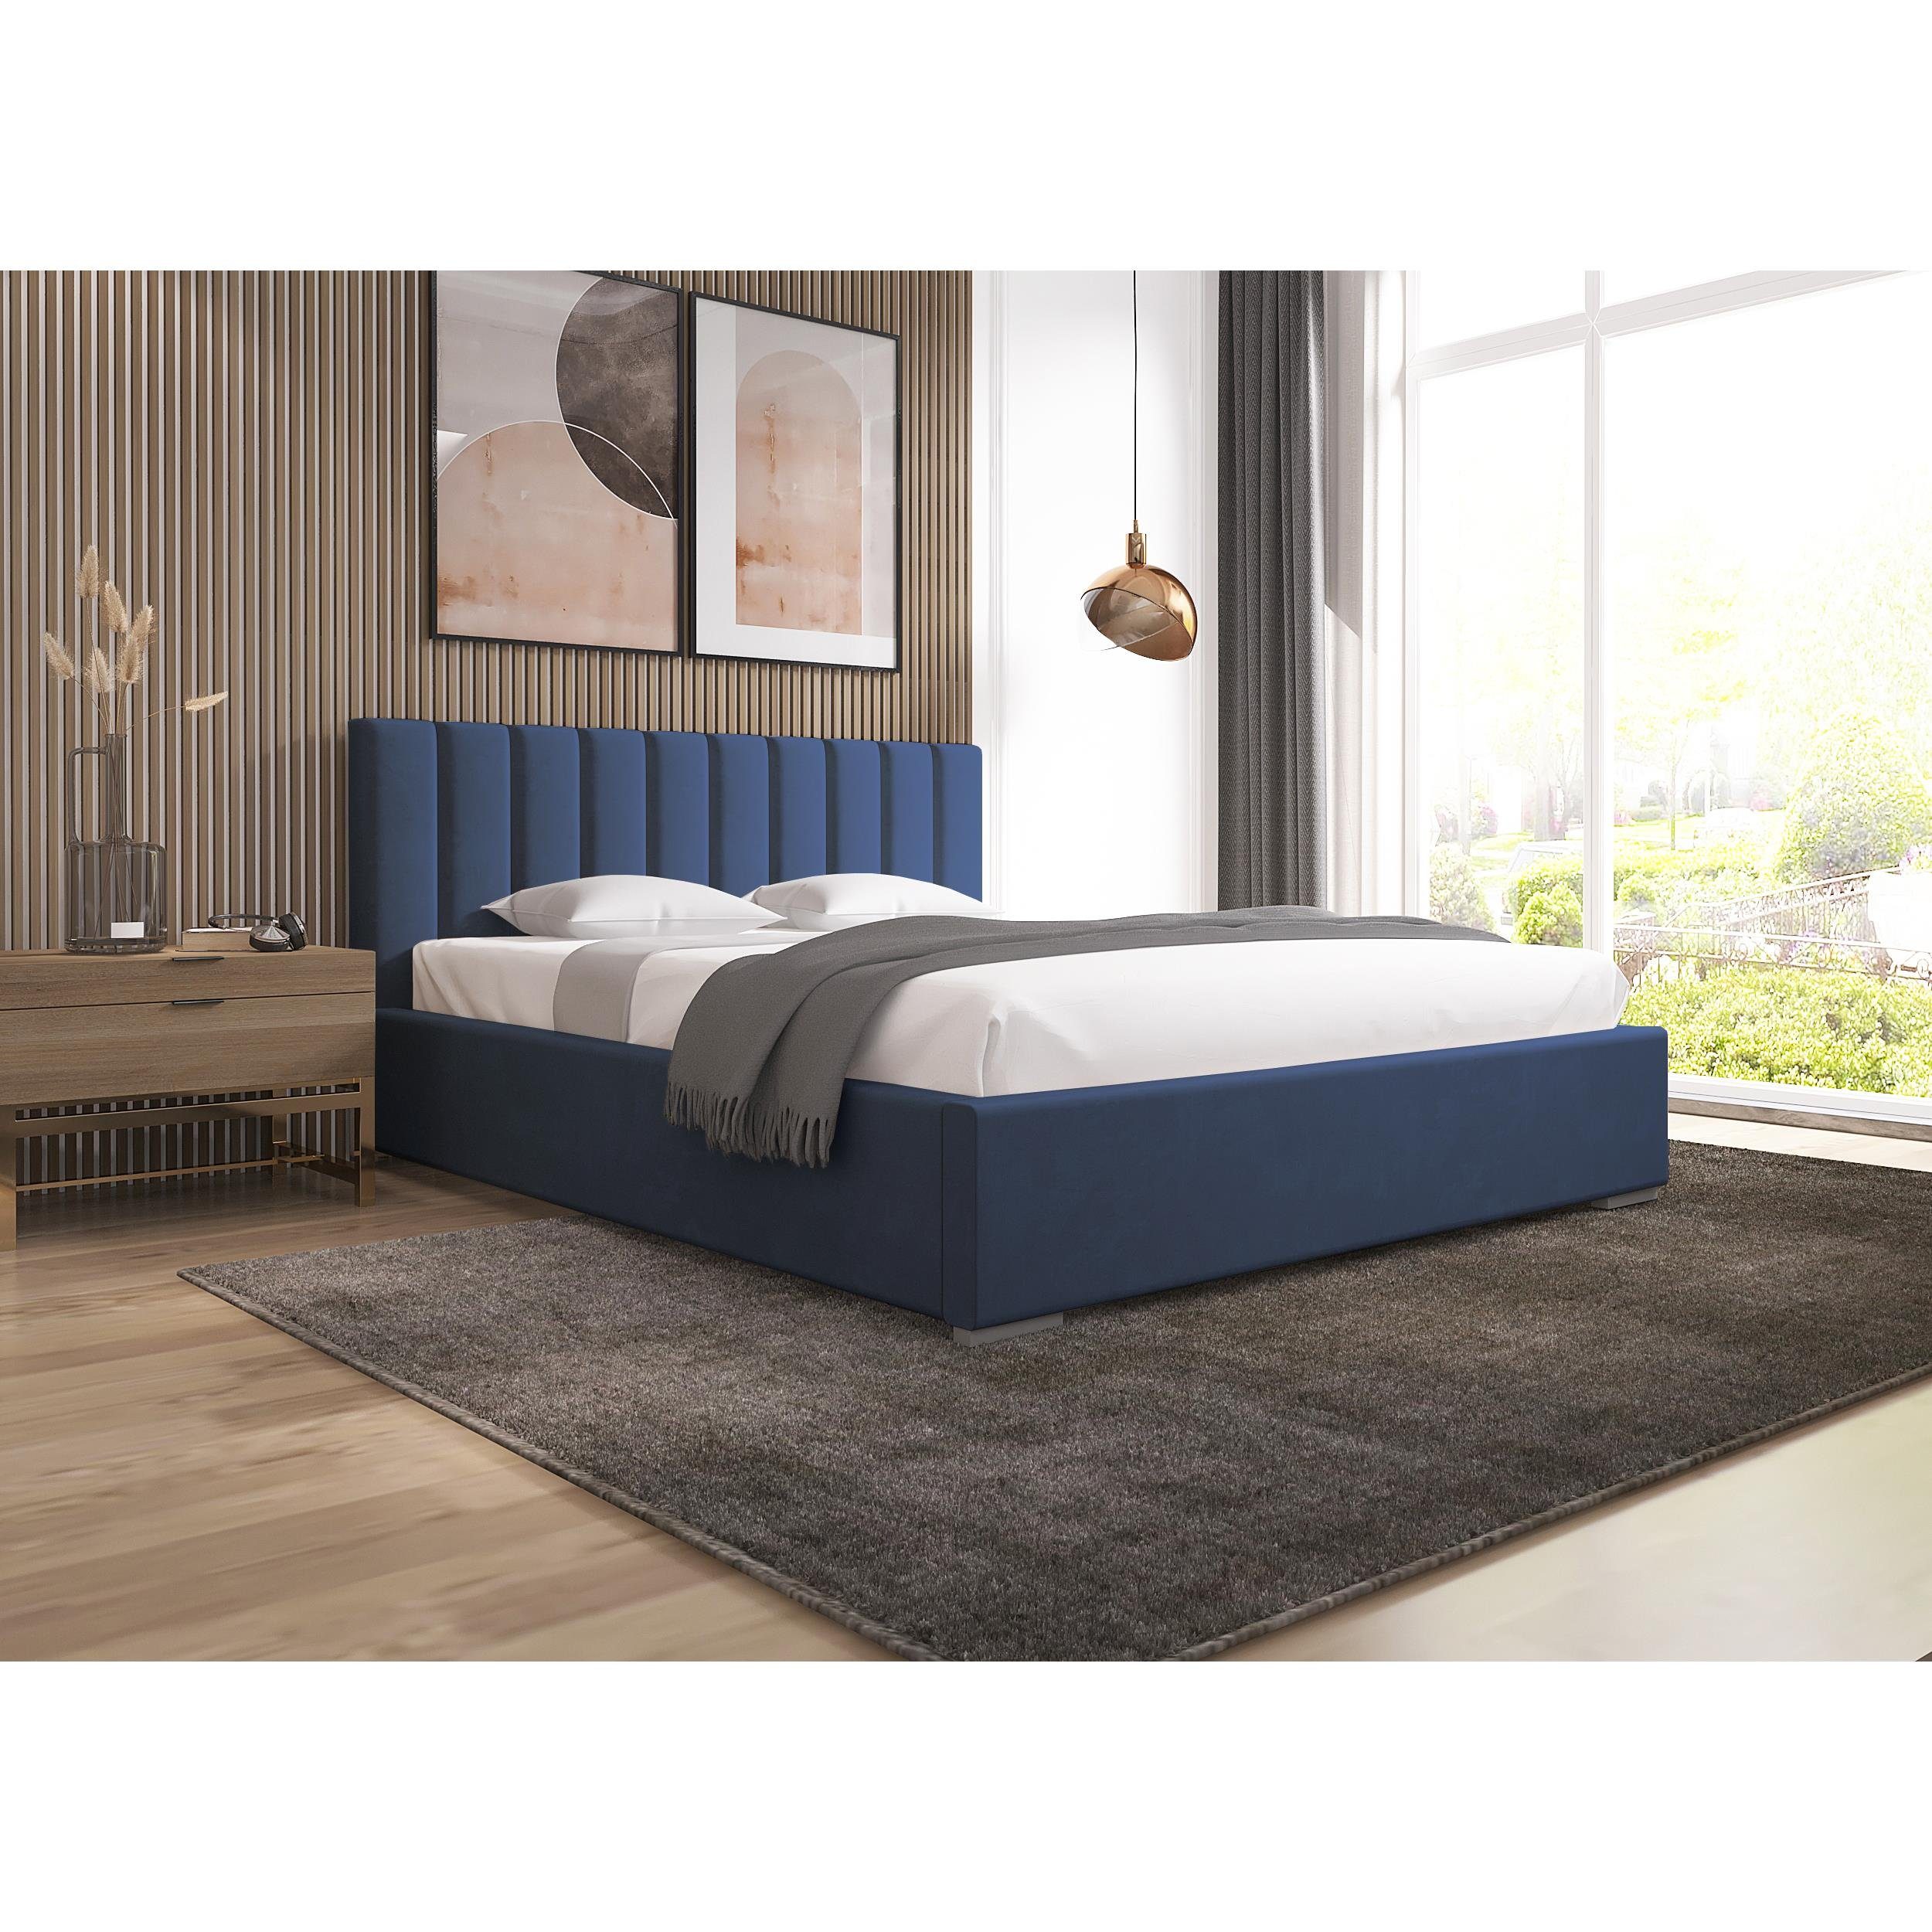 Beautysofa Polsterbett Adeline (stilvoll Bett mit Velvet-Bezug, Beige Polsterbett 120 x 200 cm), mit Bettkasten, mit Holzgestell Blau (mono 242)